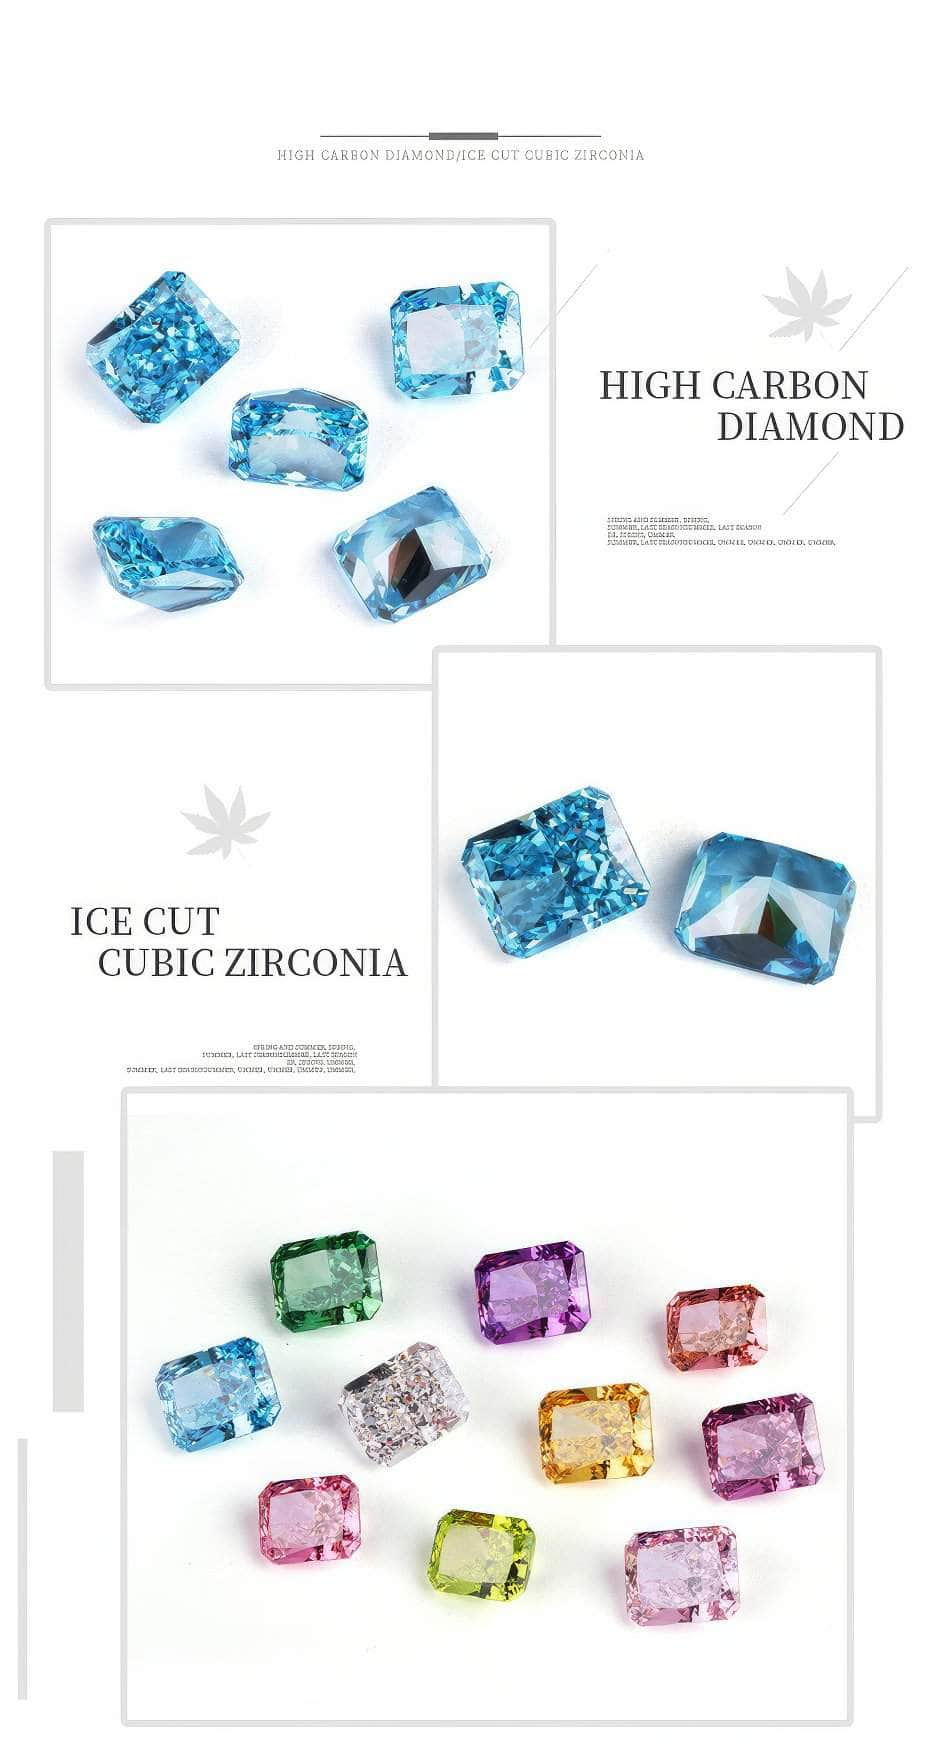 3 Set Sea Blue Emerald Cut Rectangular Lab Grown Diamond Gemstone